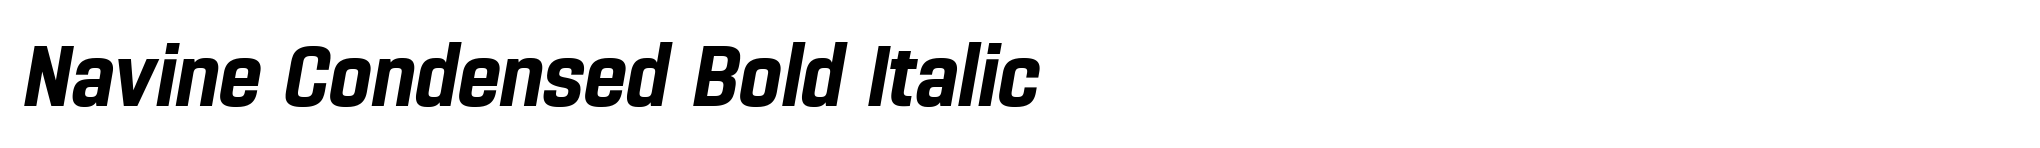 Navine Condensed Bold Italic image